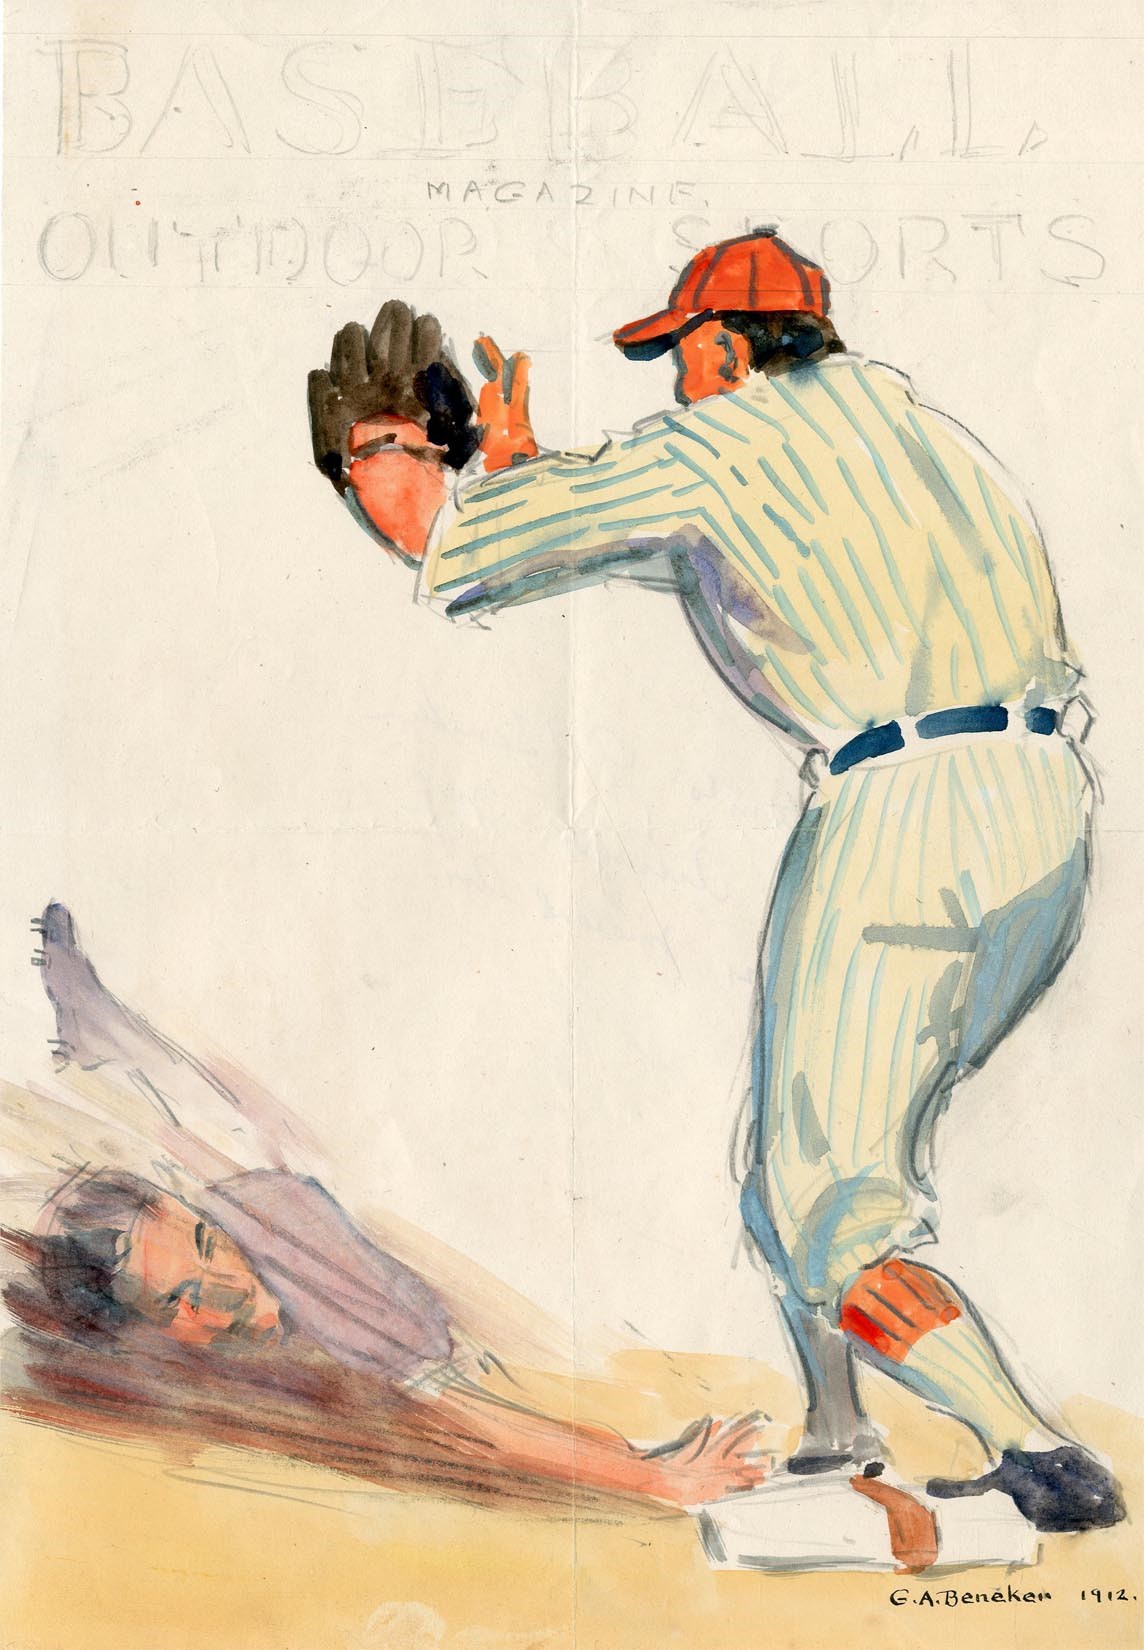 - 1912 Baseball Magazine "Cloud of Dust" Cover Art Study by Gerrit Beneker (1882-1934)